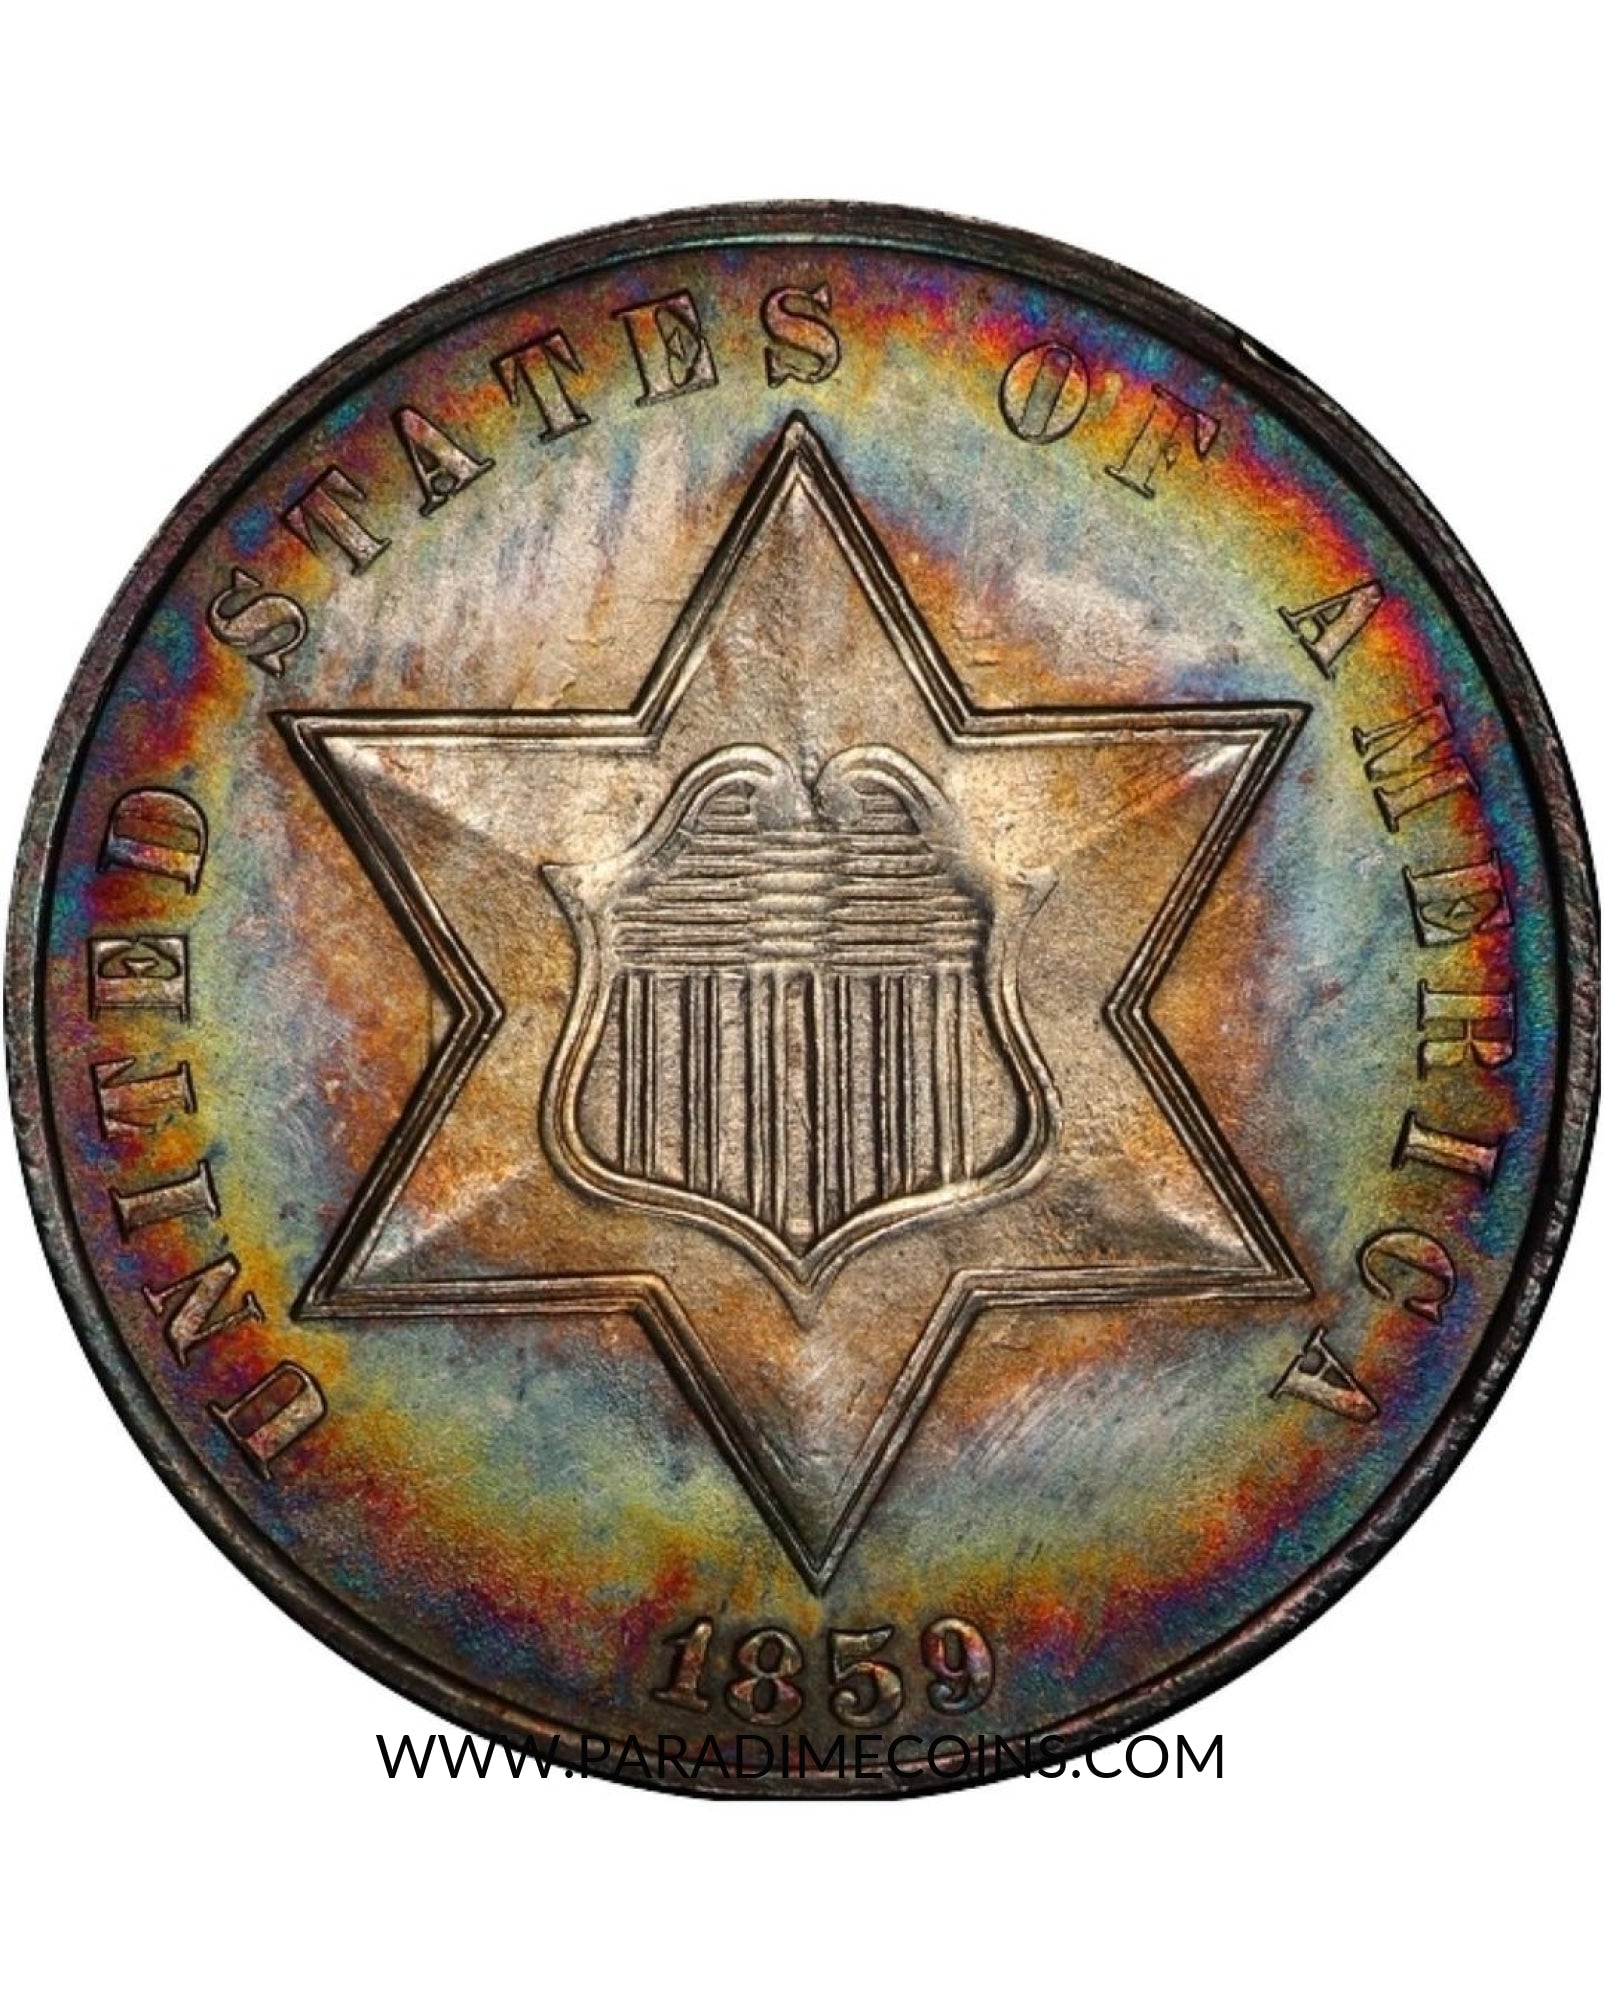 1859 3CS MS66 PCGS - Paradime Coins | PCGS NGC CACG CAC Rare US Numismatic Coins For Sale